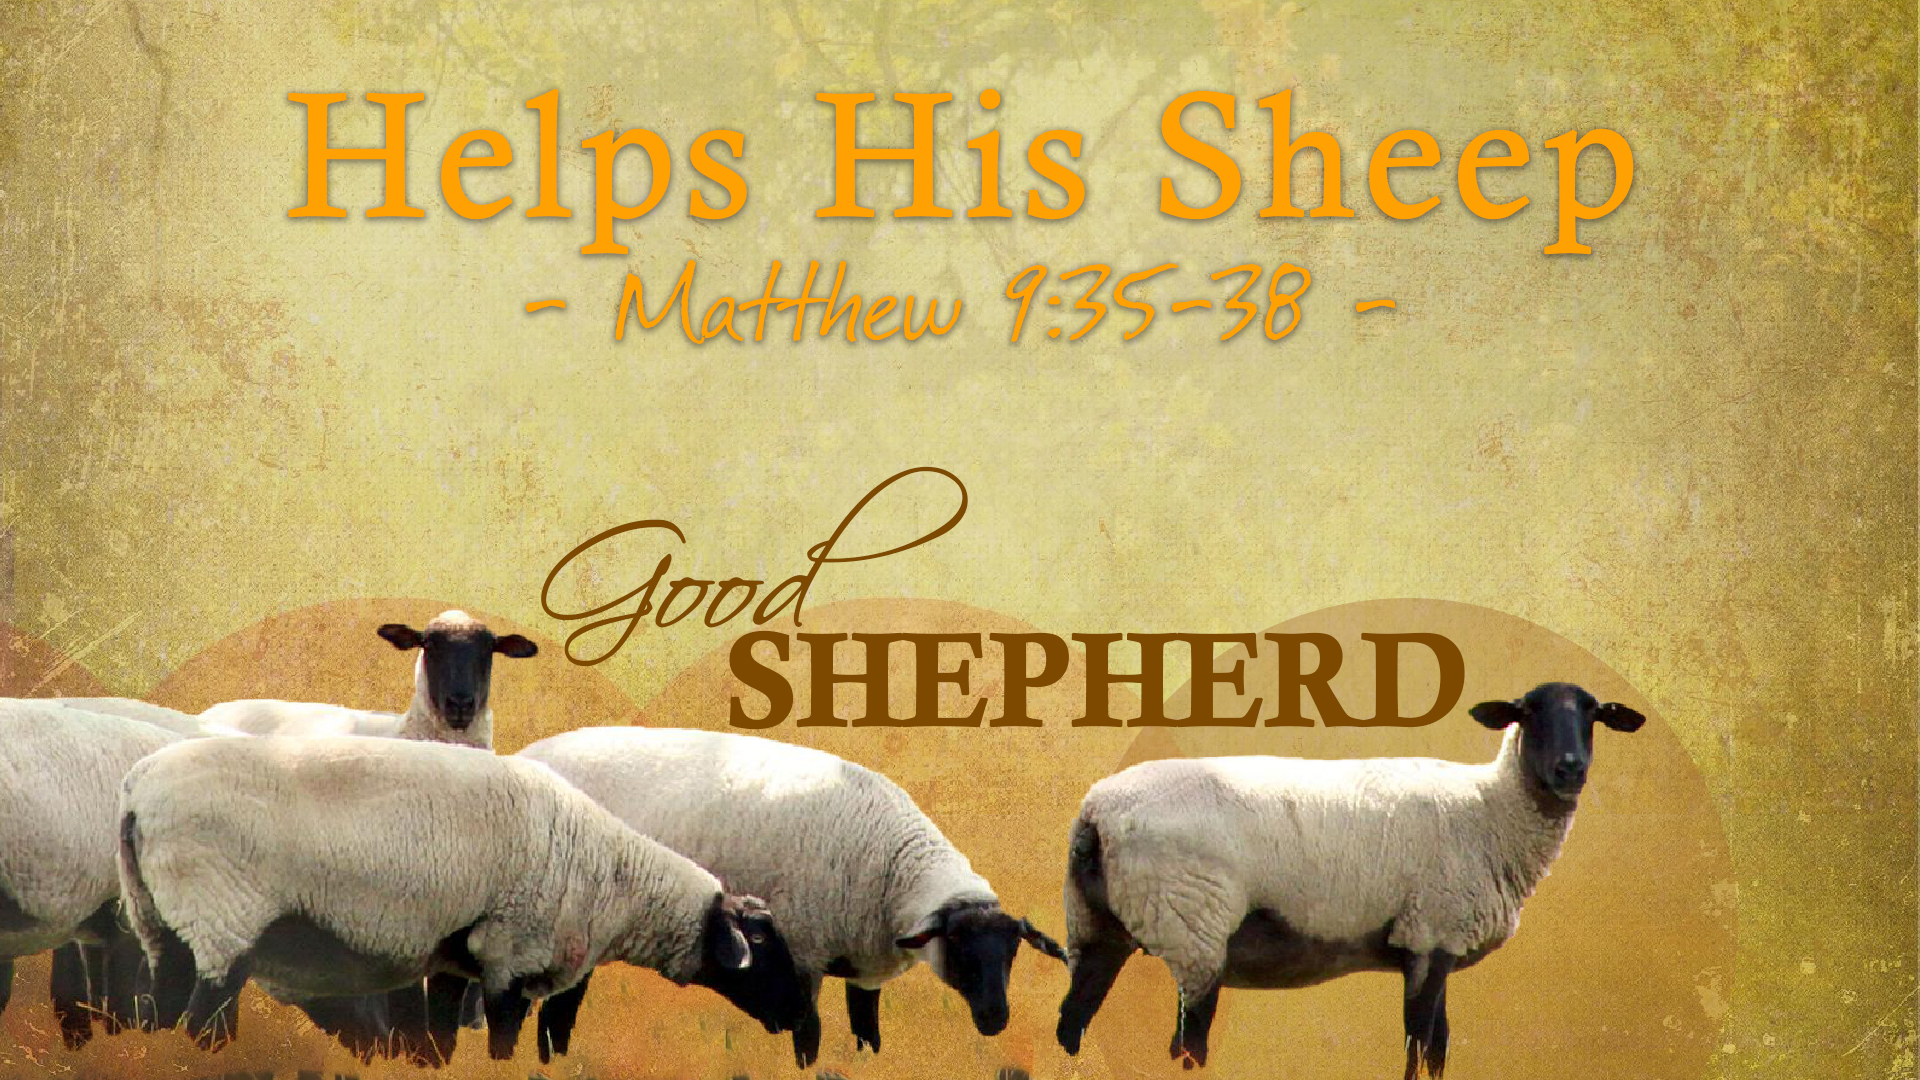  Good Shepherd, part 5: Helps His Sheep  Image